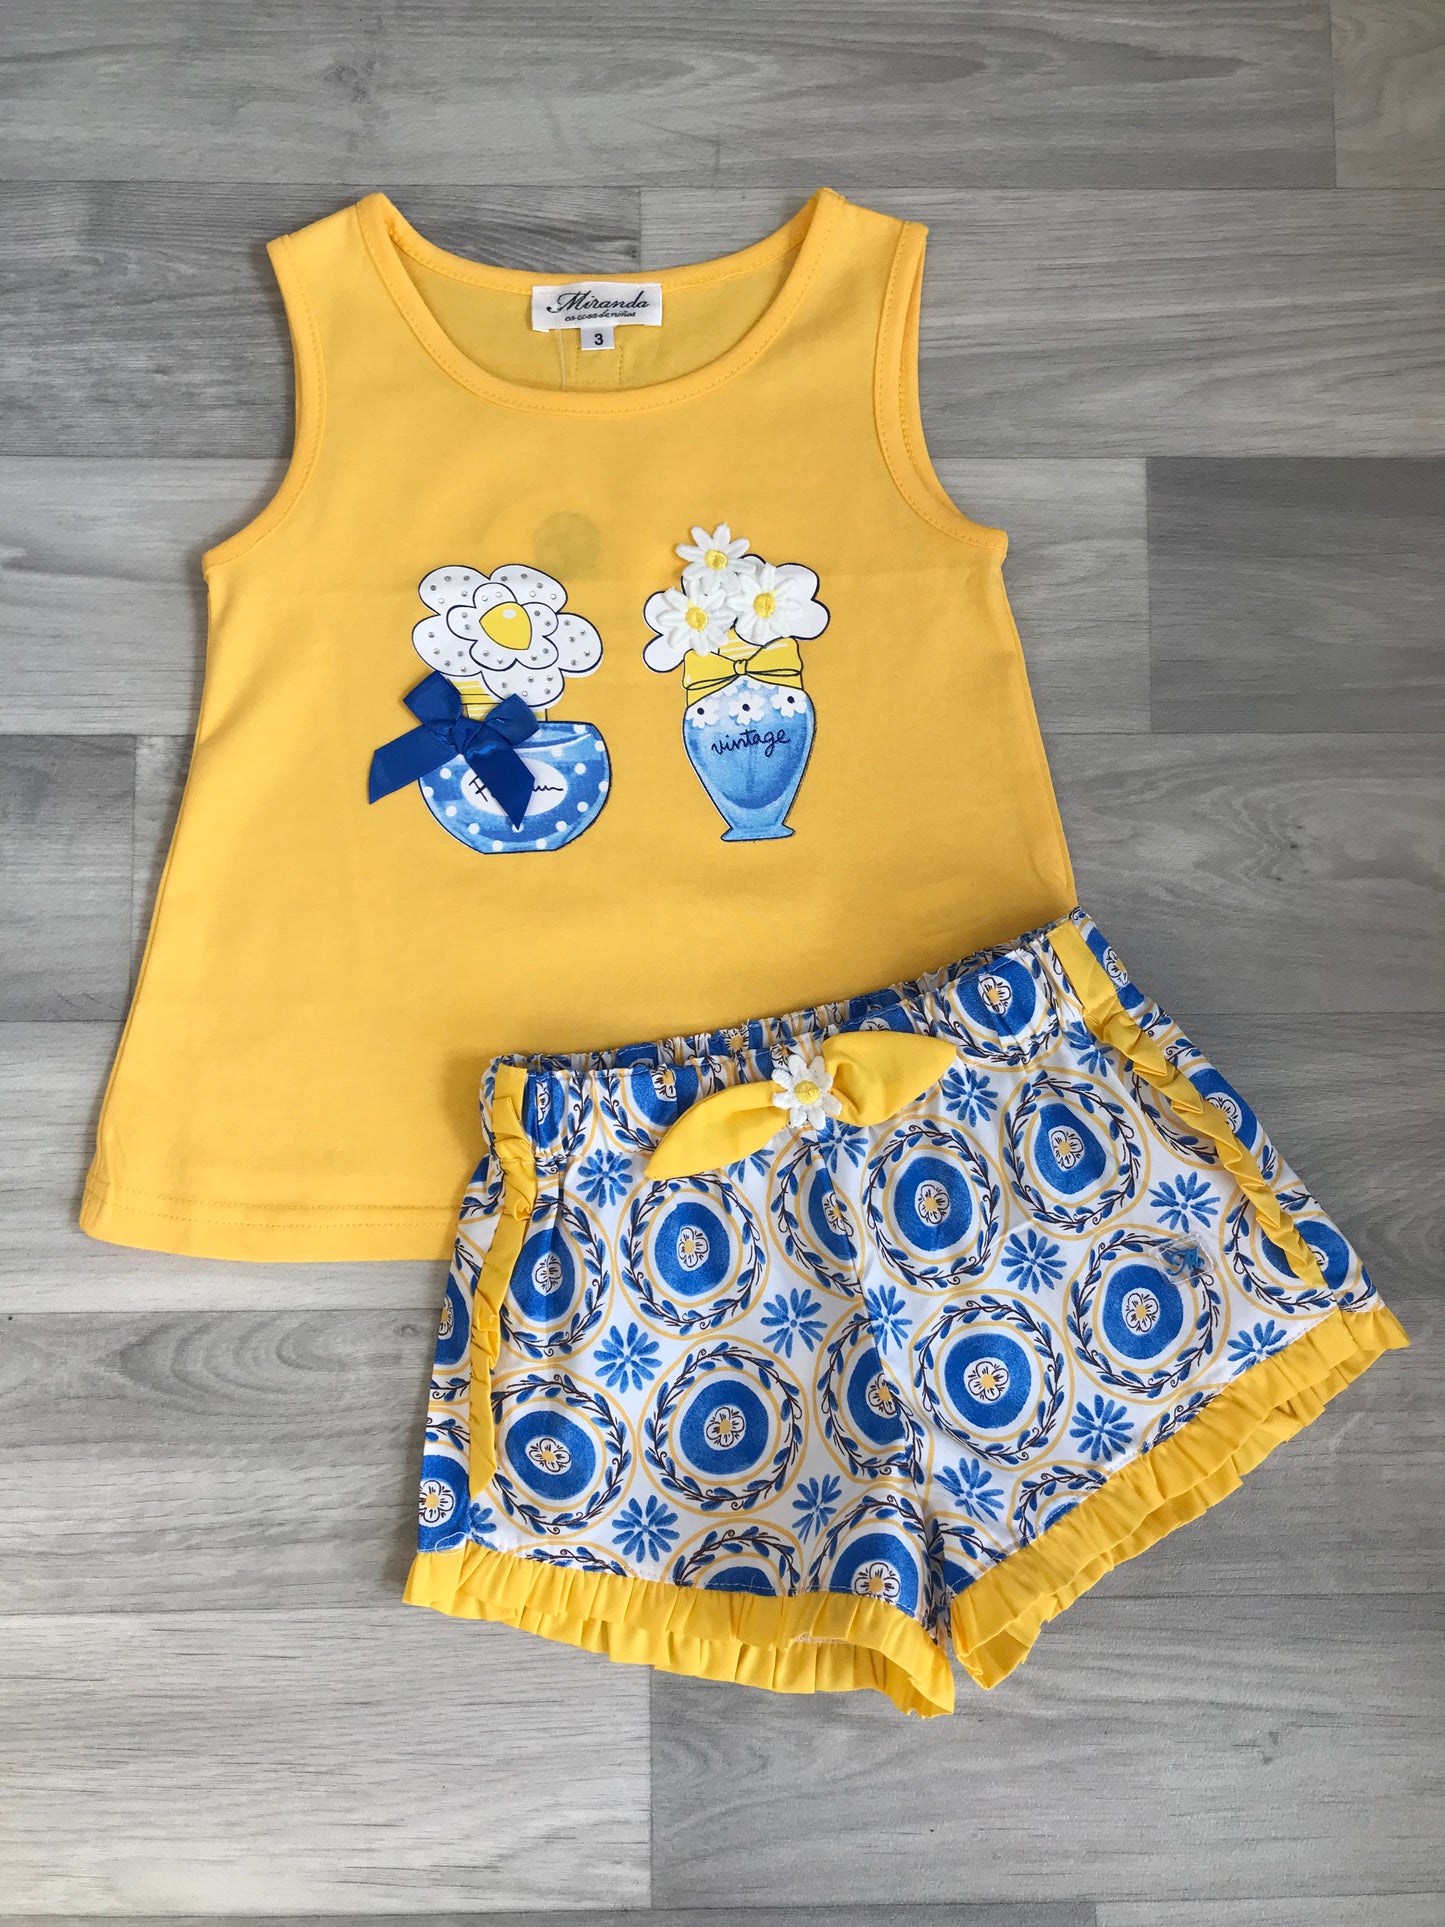 SS23 MIRANDA Blue & Yellow Tile Print Girls Short Set - 407